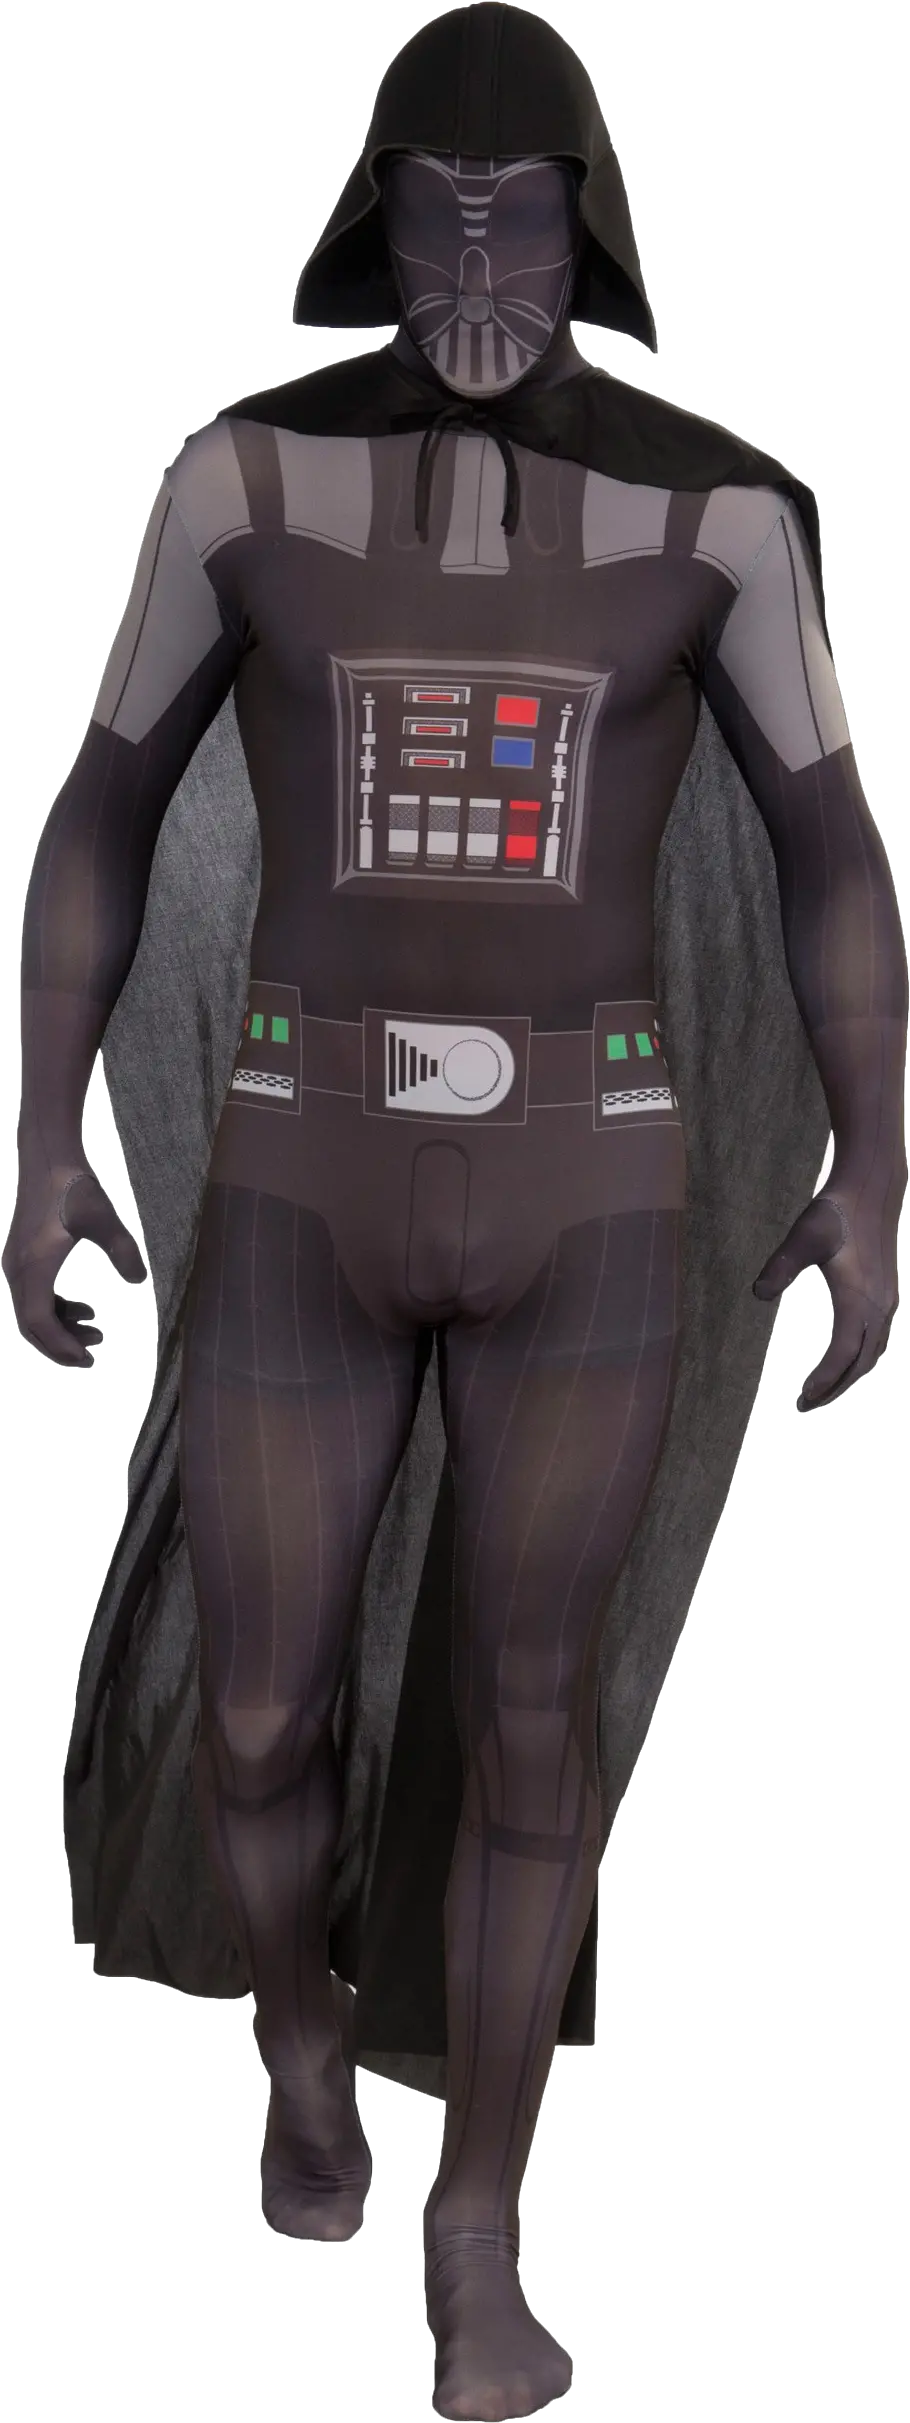 Darth Vader Png Free Image Download